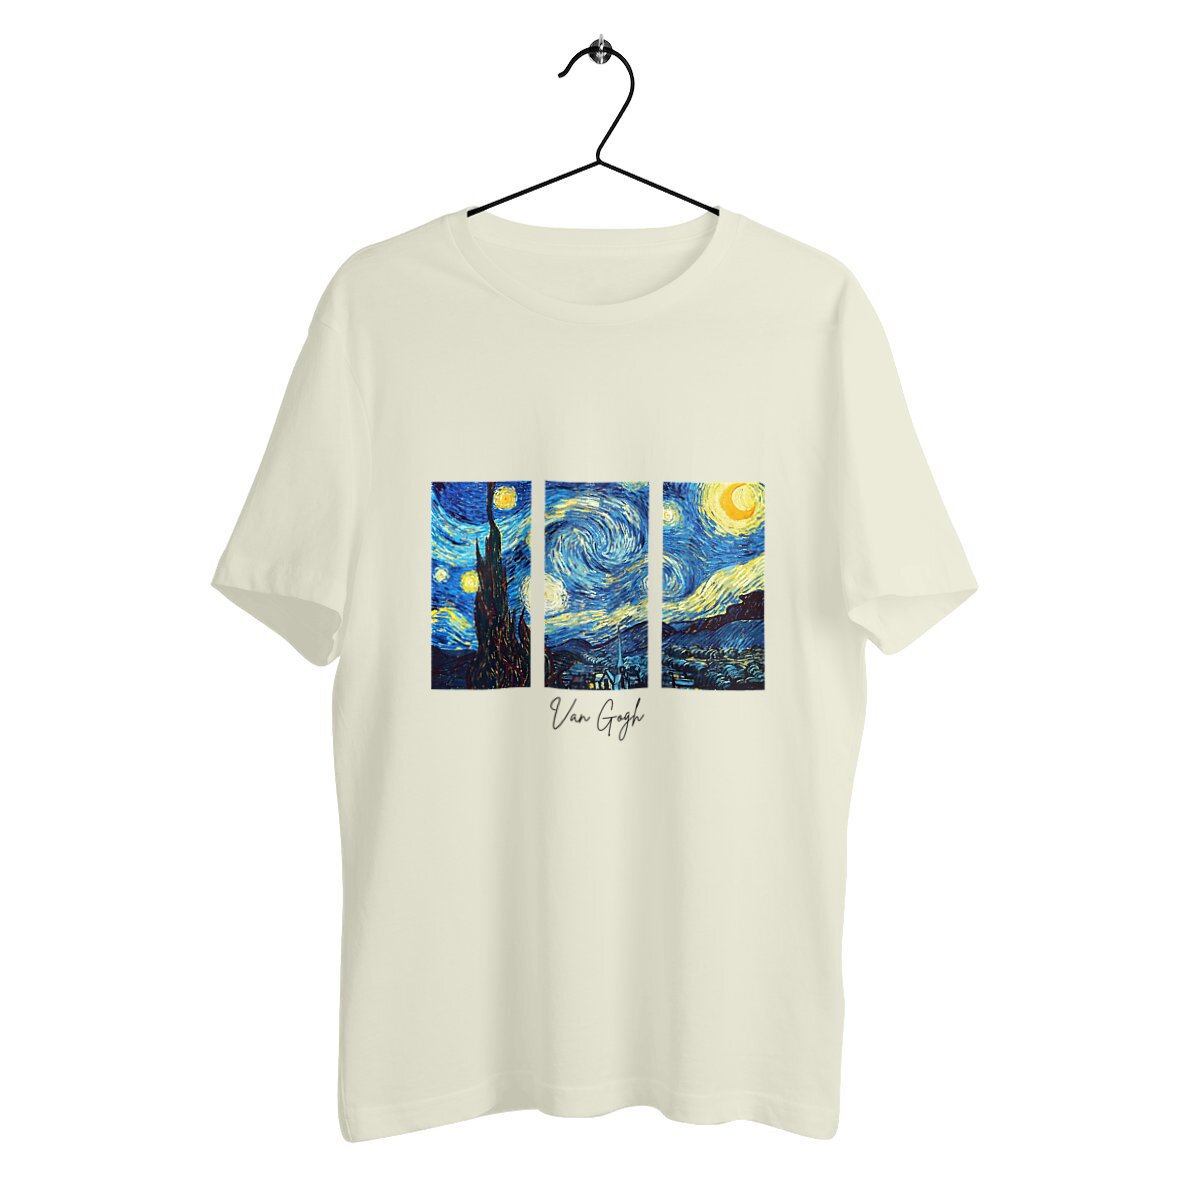 T-shirt Van Gogh - EtiKo